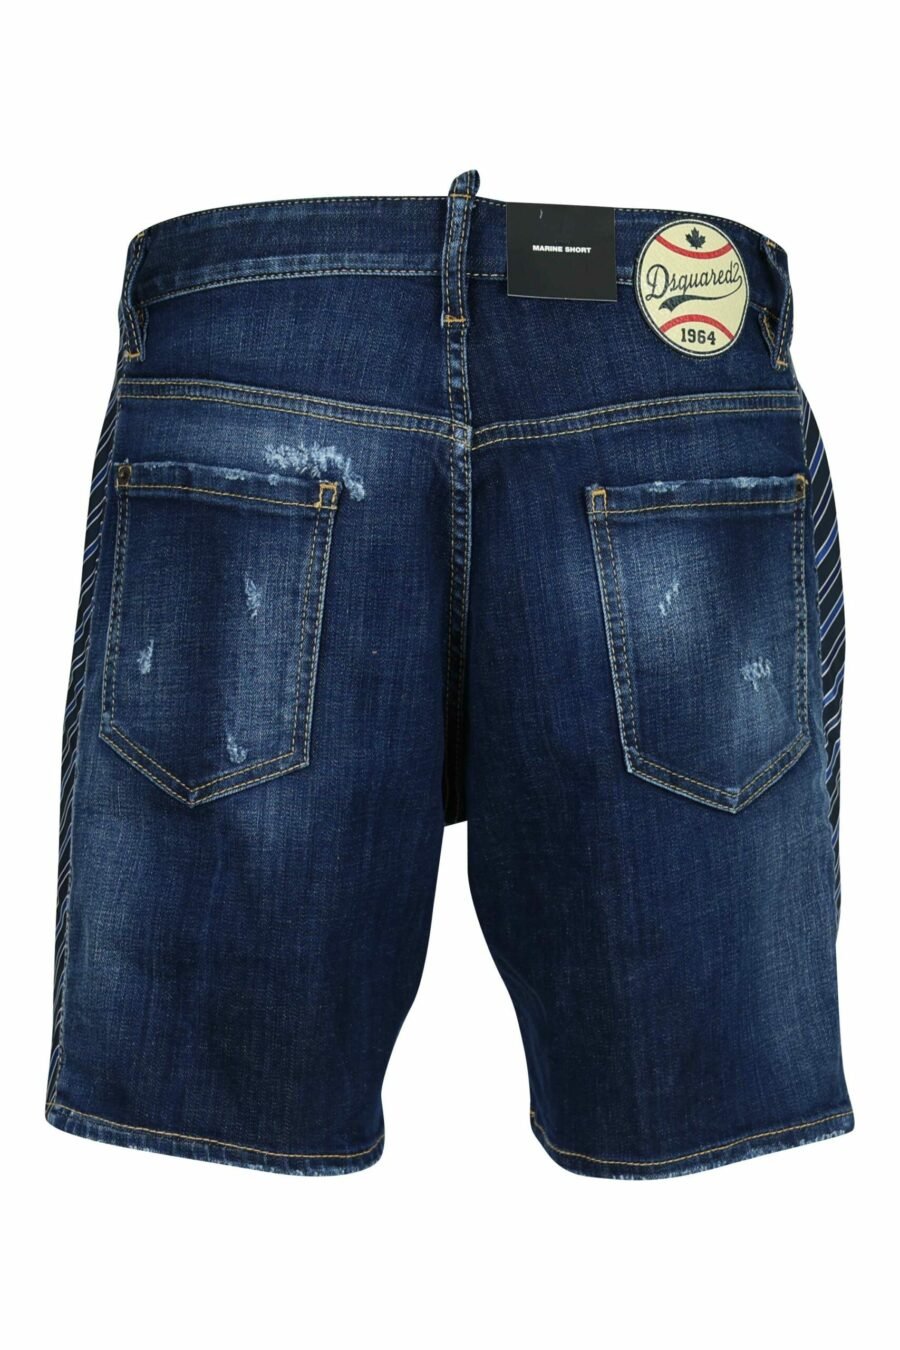 Blue denim shorts "marine short" - 8054148477691 2 scaled